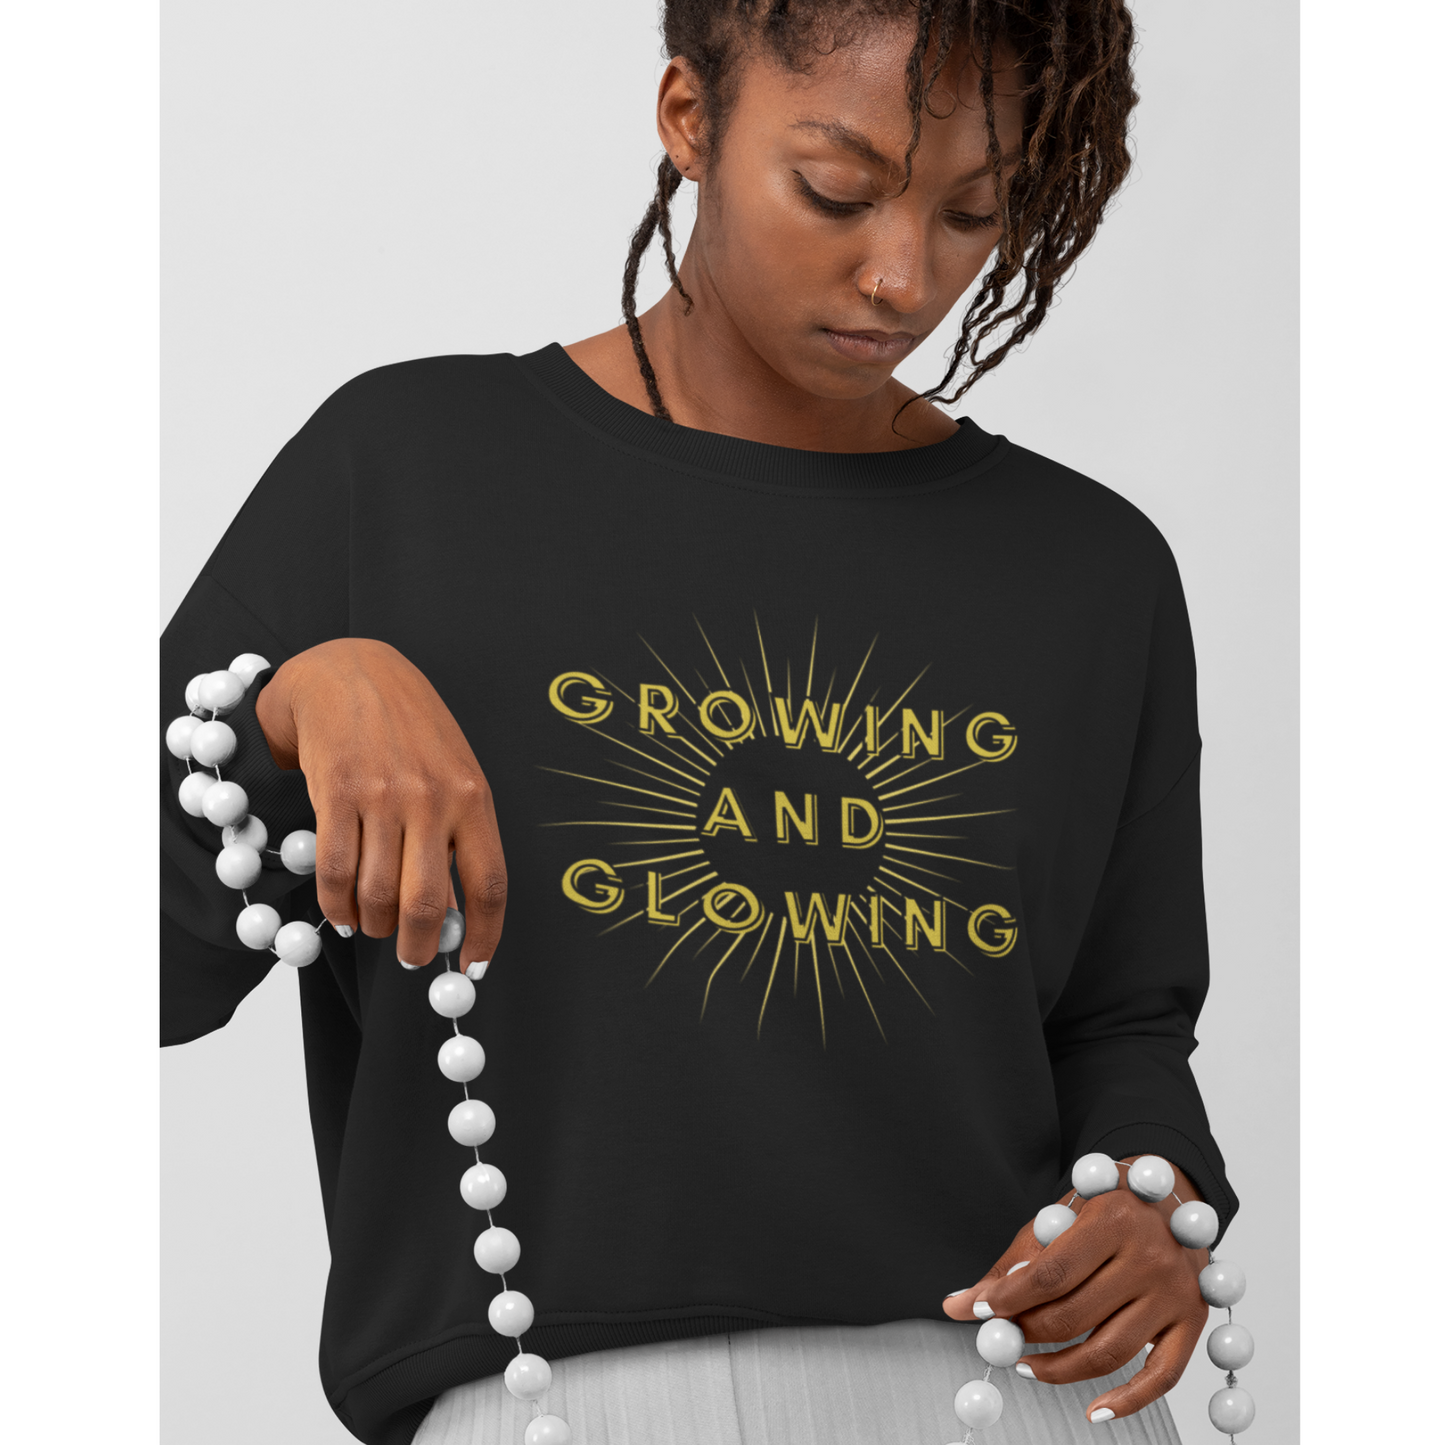 Growing & Glowing Sweatshirt, Women's Empowerment Sweatshirt, Christian Sweatshirt, Faith Apparel, Faith-Based Apparel, Christian Apparel